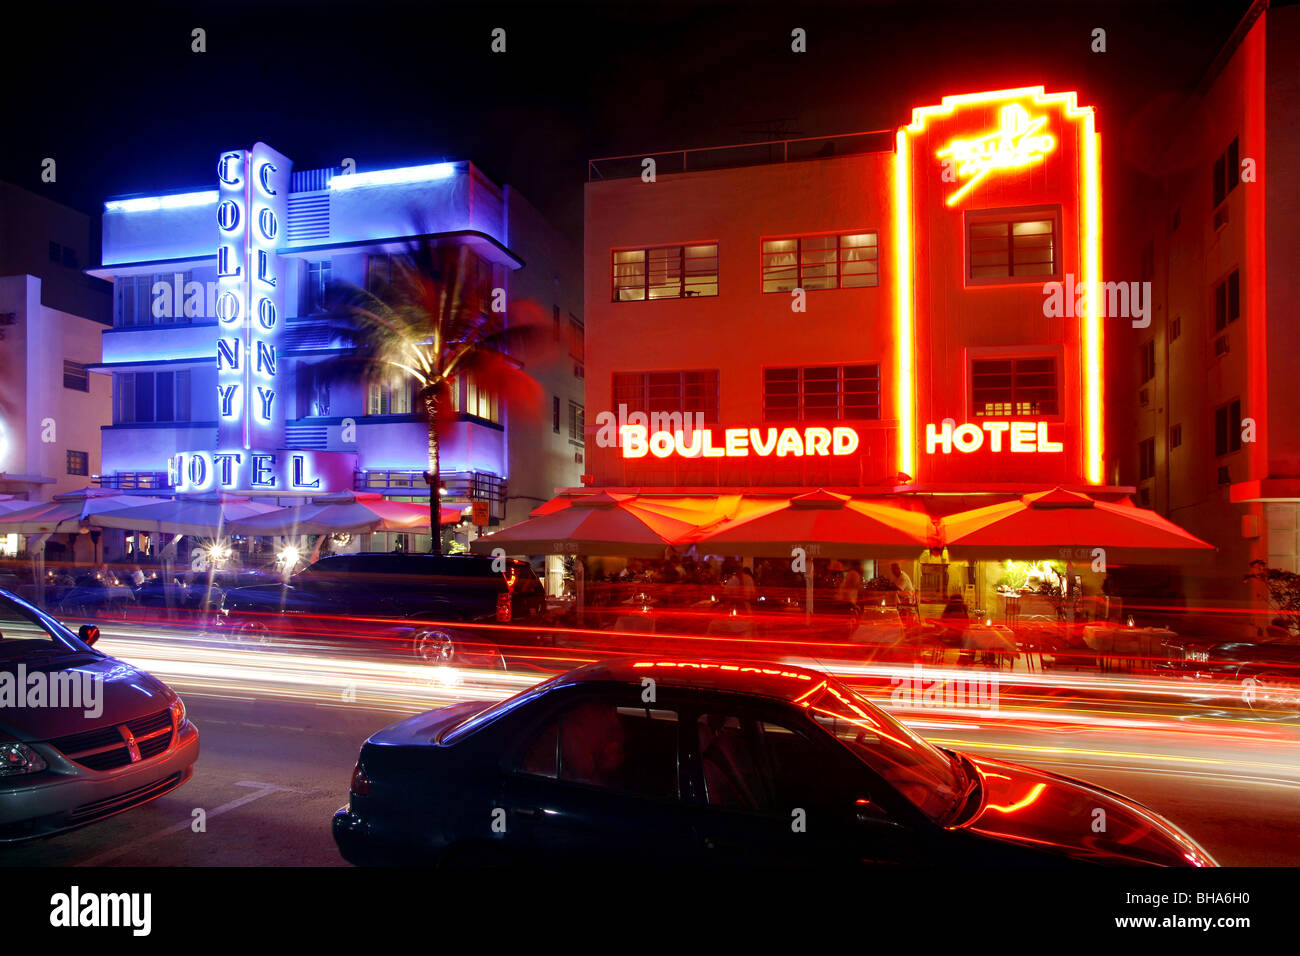 Ocean Drive, South Beach, Miami, Florida, USA Stockfoto